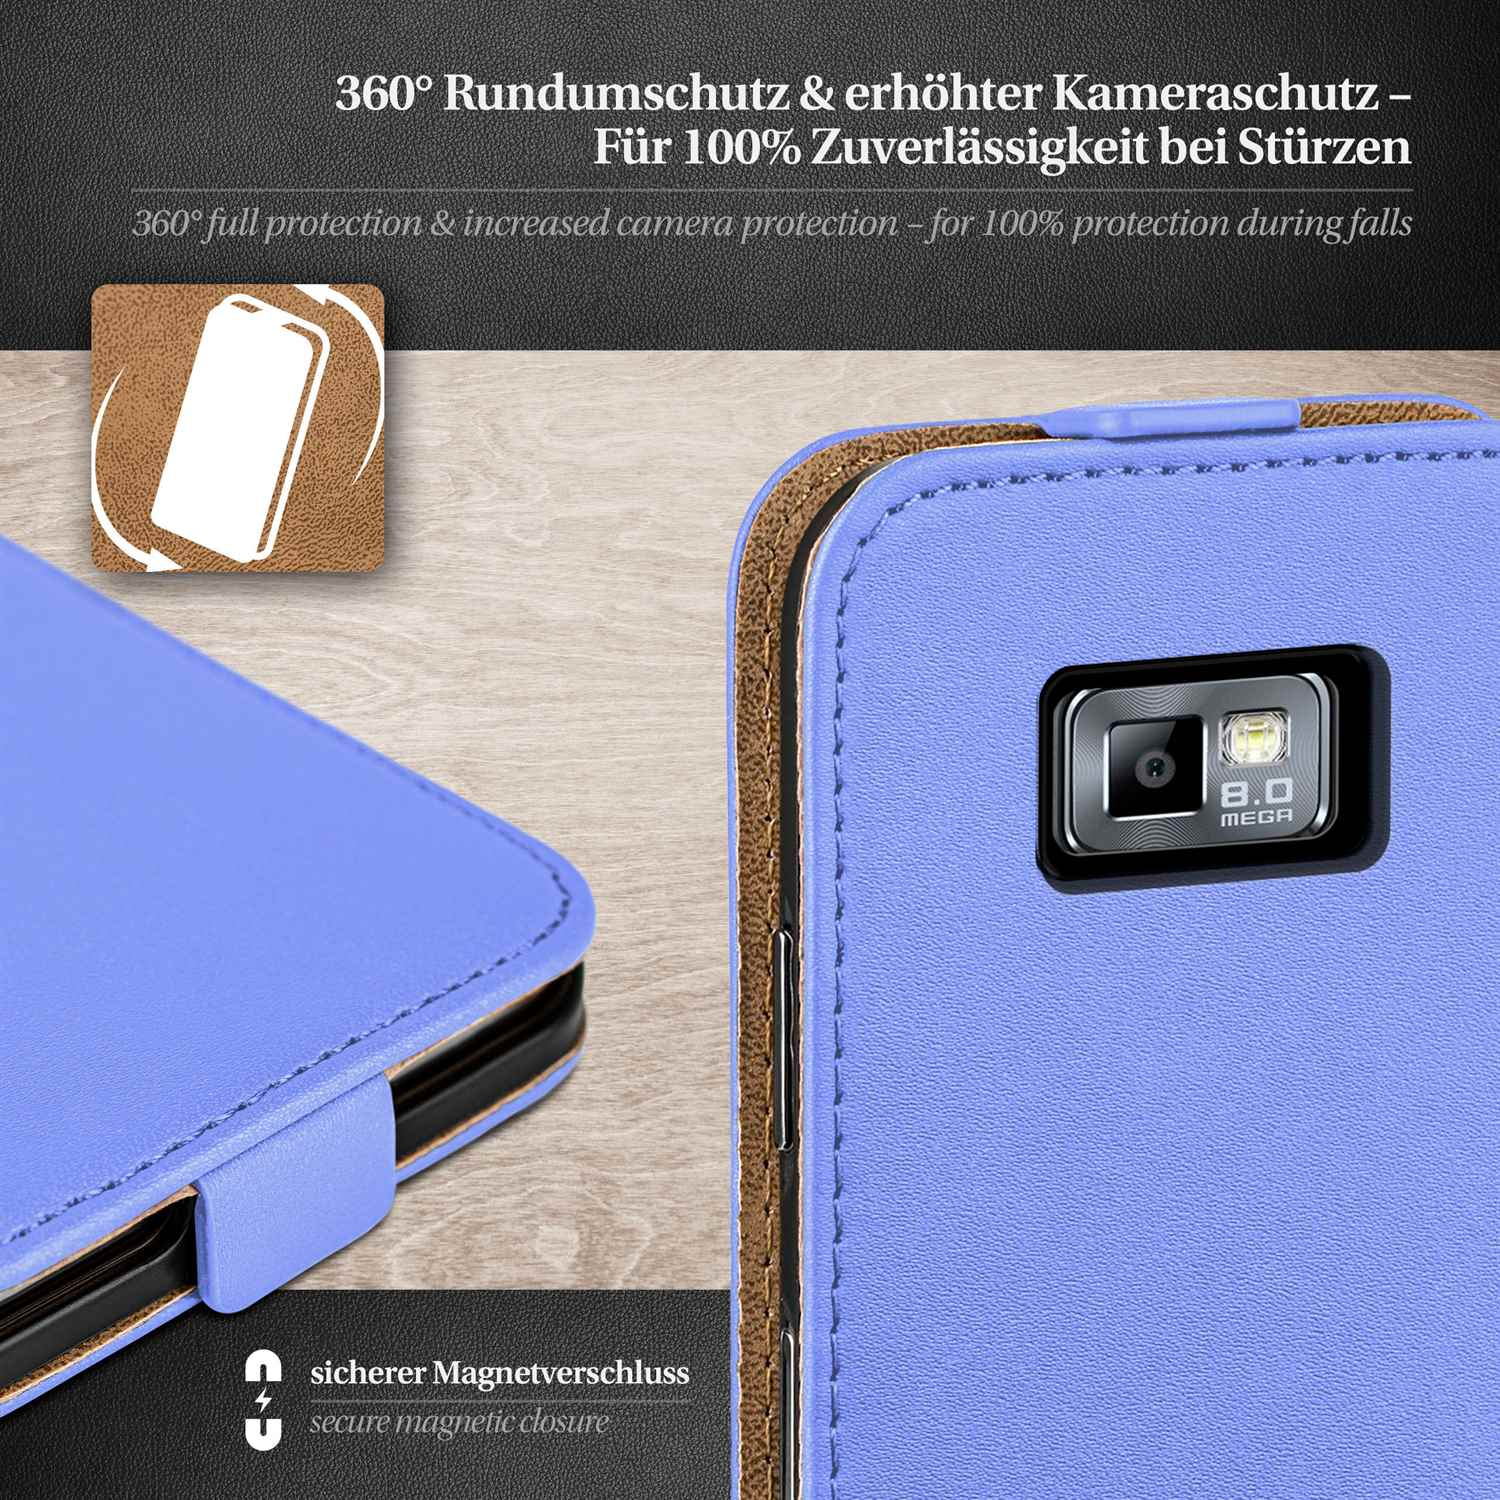 Samsung, Sky-Blue S2, MOEX Galaxy Cover, Case, Flip Flip